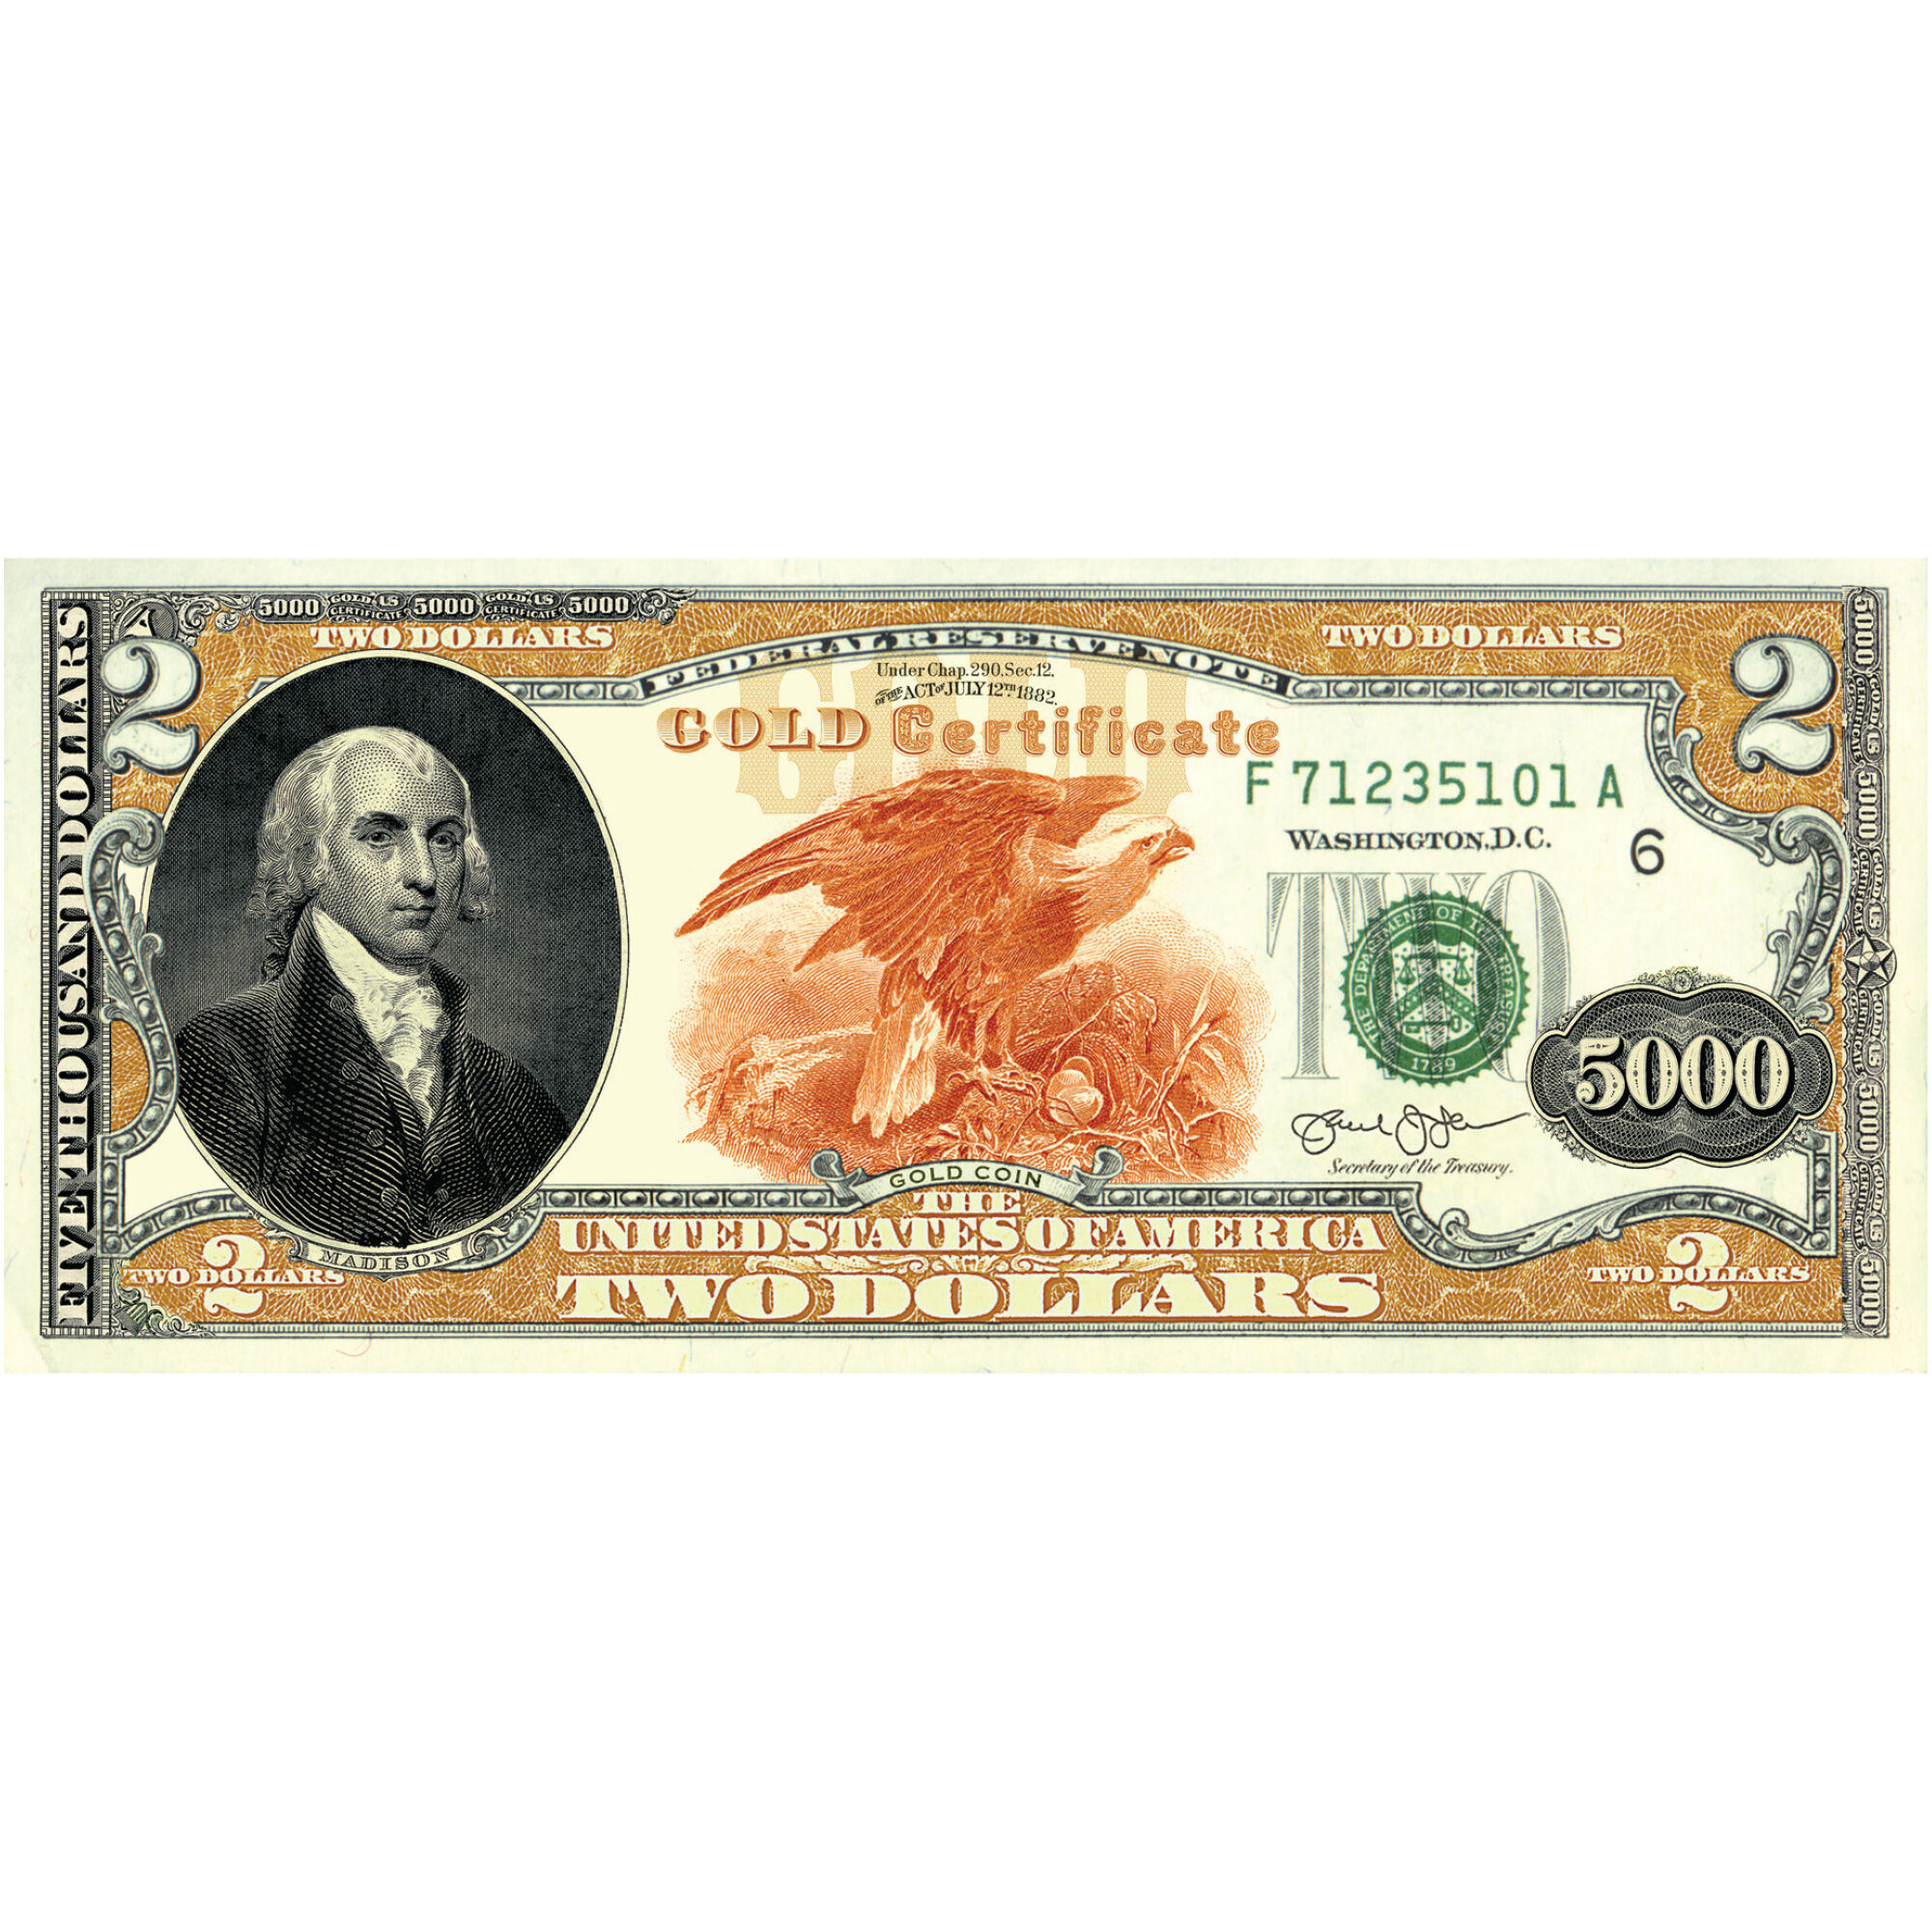 1882 Gold Cert Enhanced $2 Bills 10449 0024 c 5000 bill